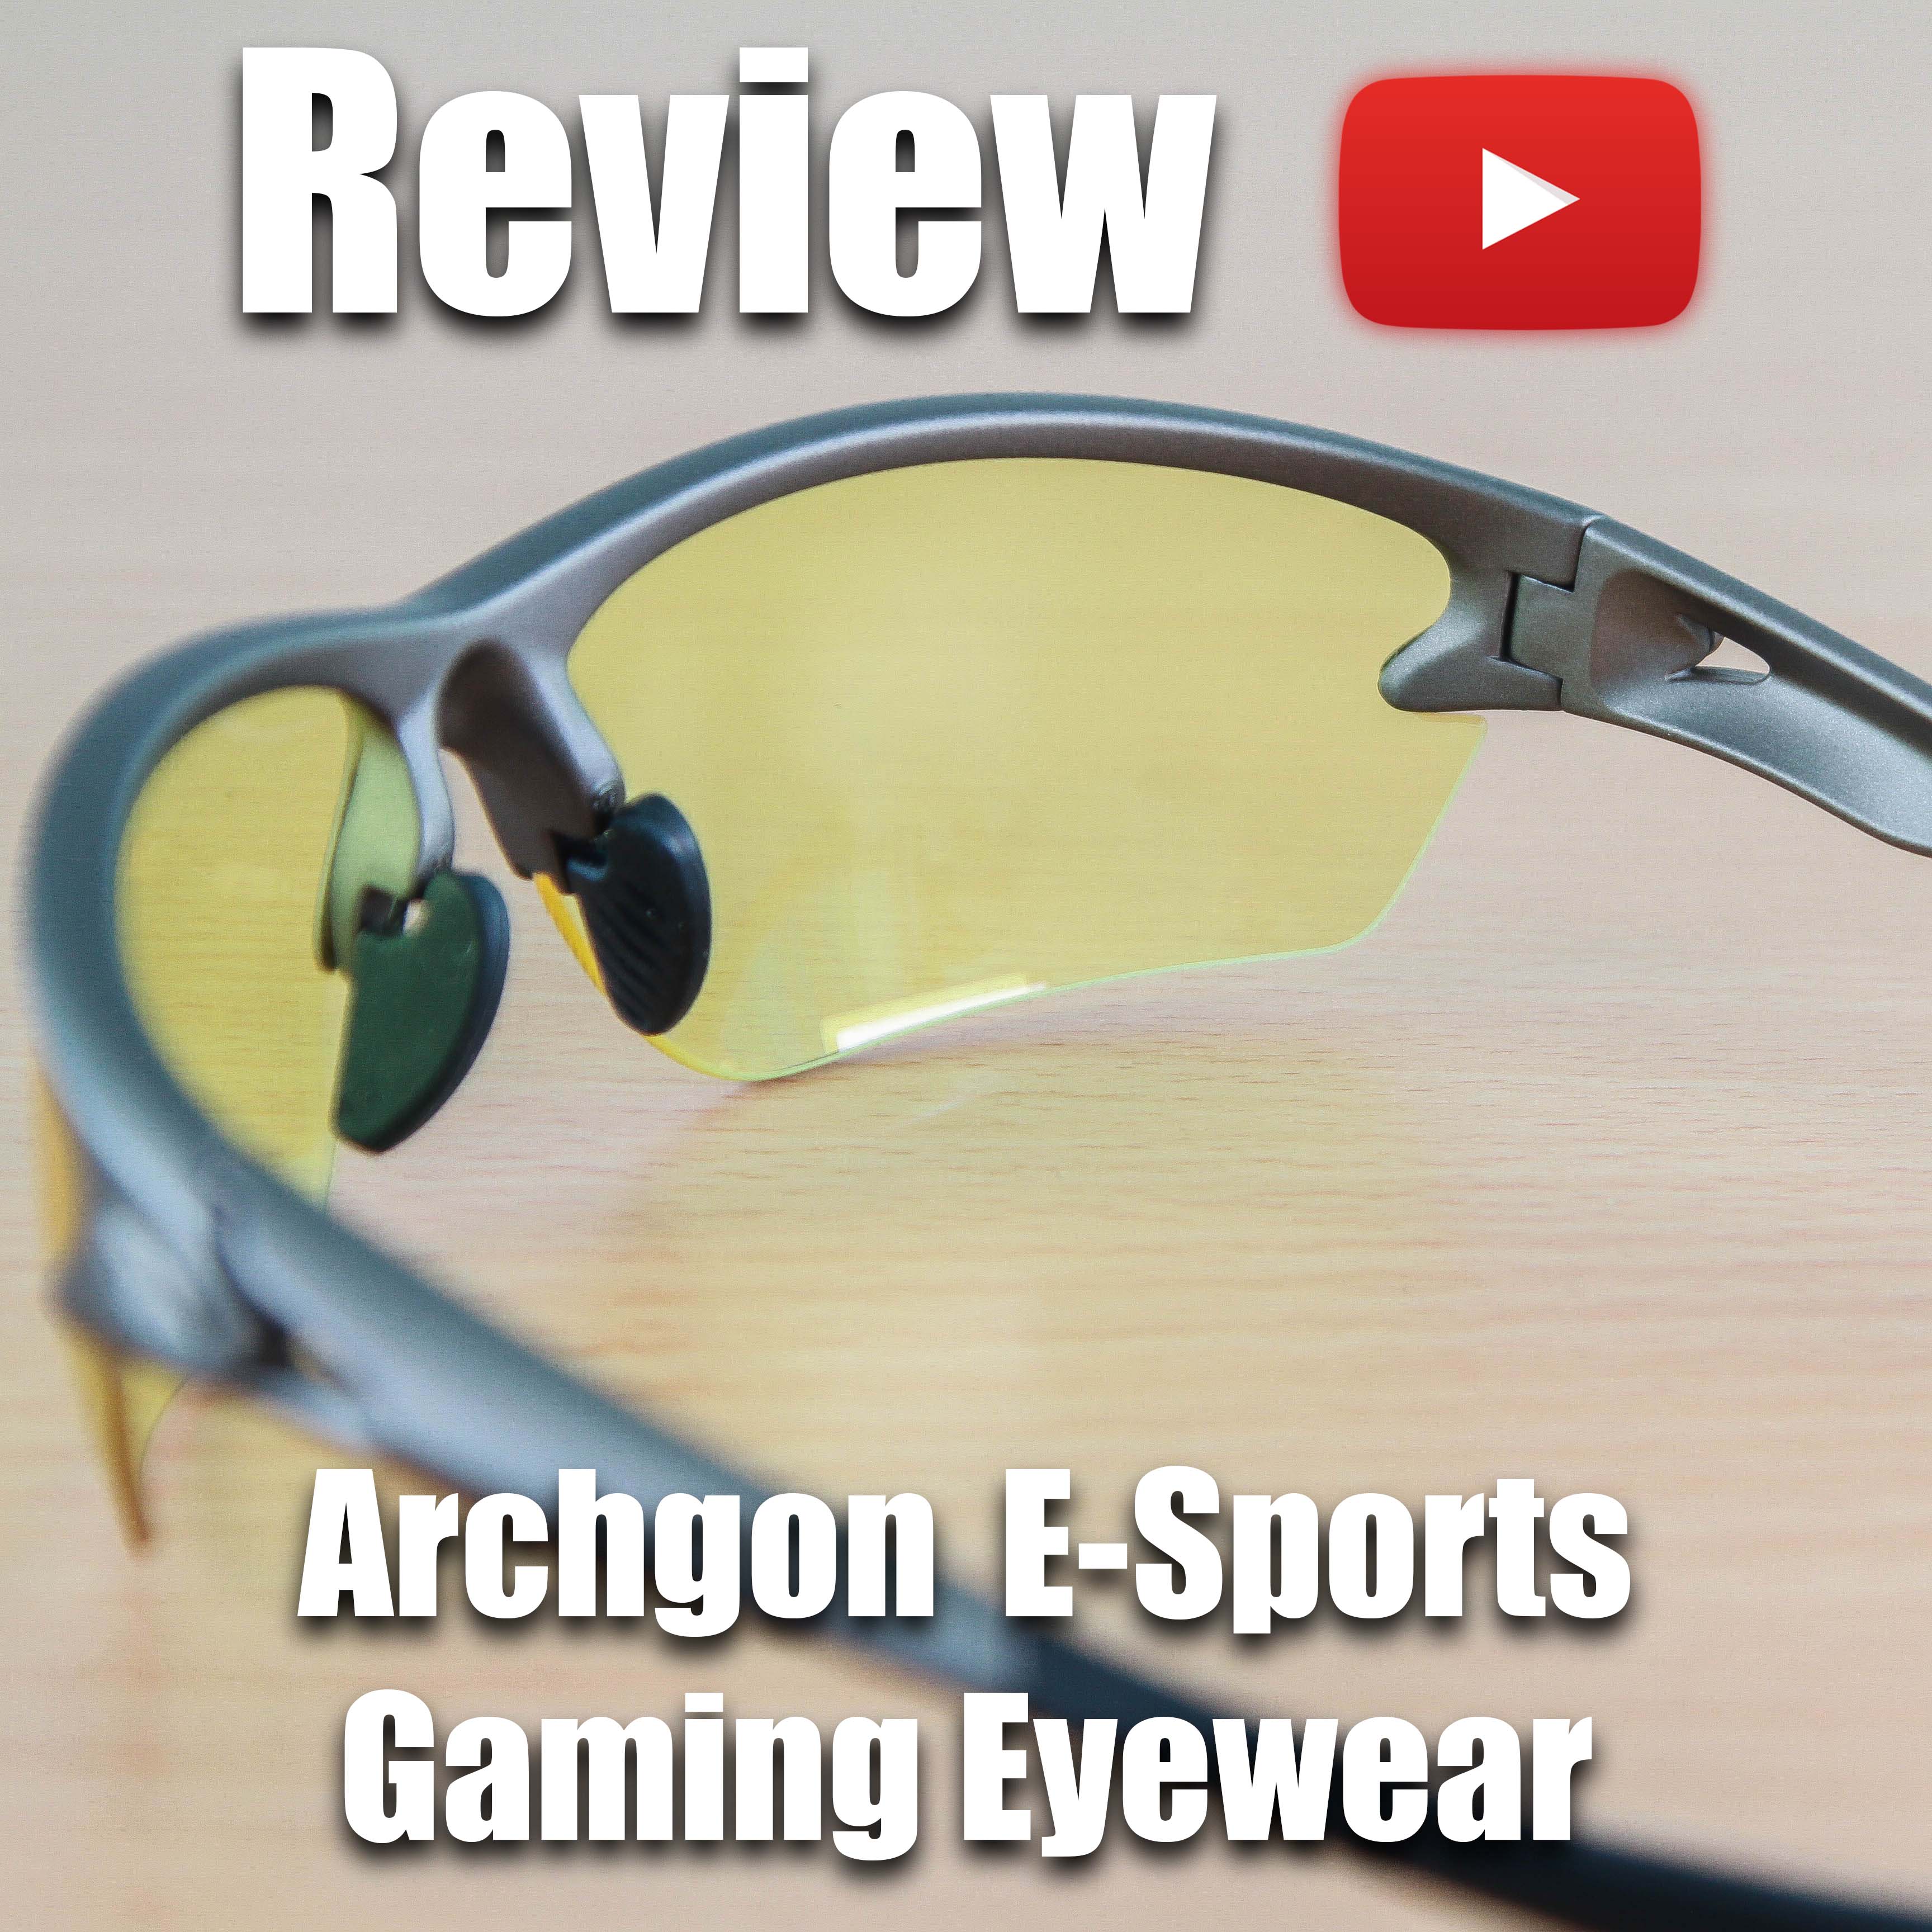 Review Archgon Esports Gaming Eyewear